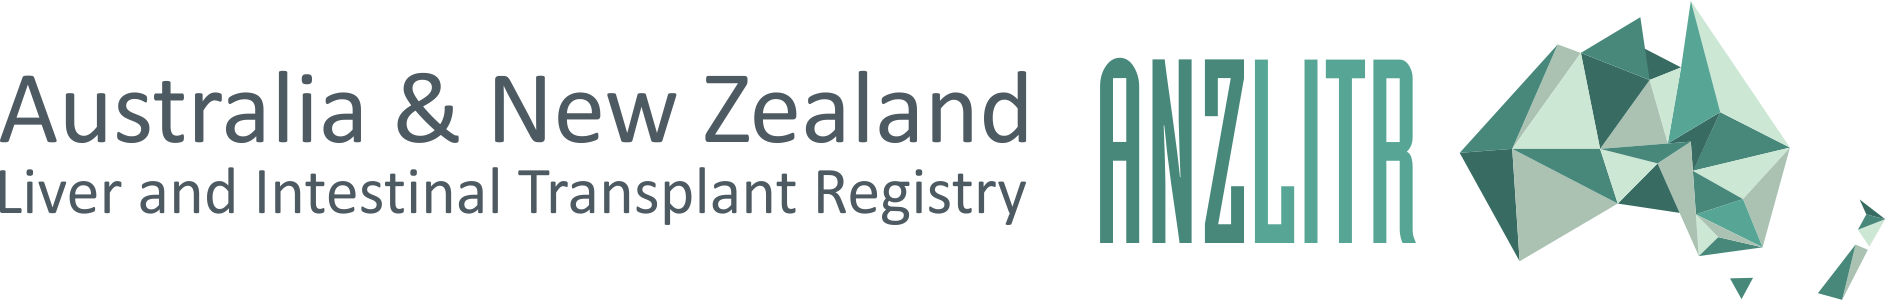 Australia and New Zealand Liver & Intestinal Transplant Registry [ANZLITR]